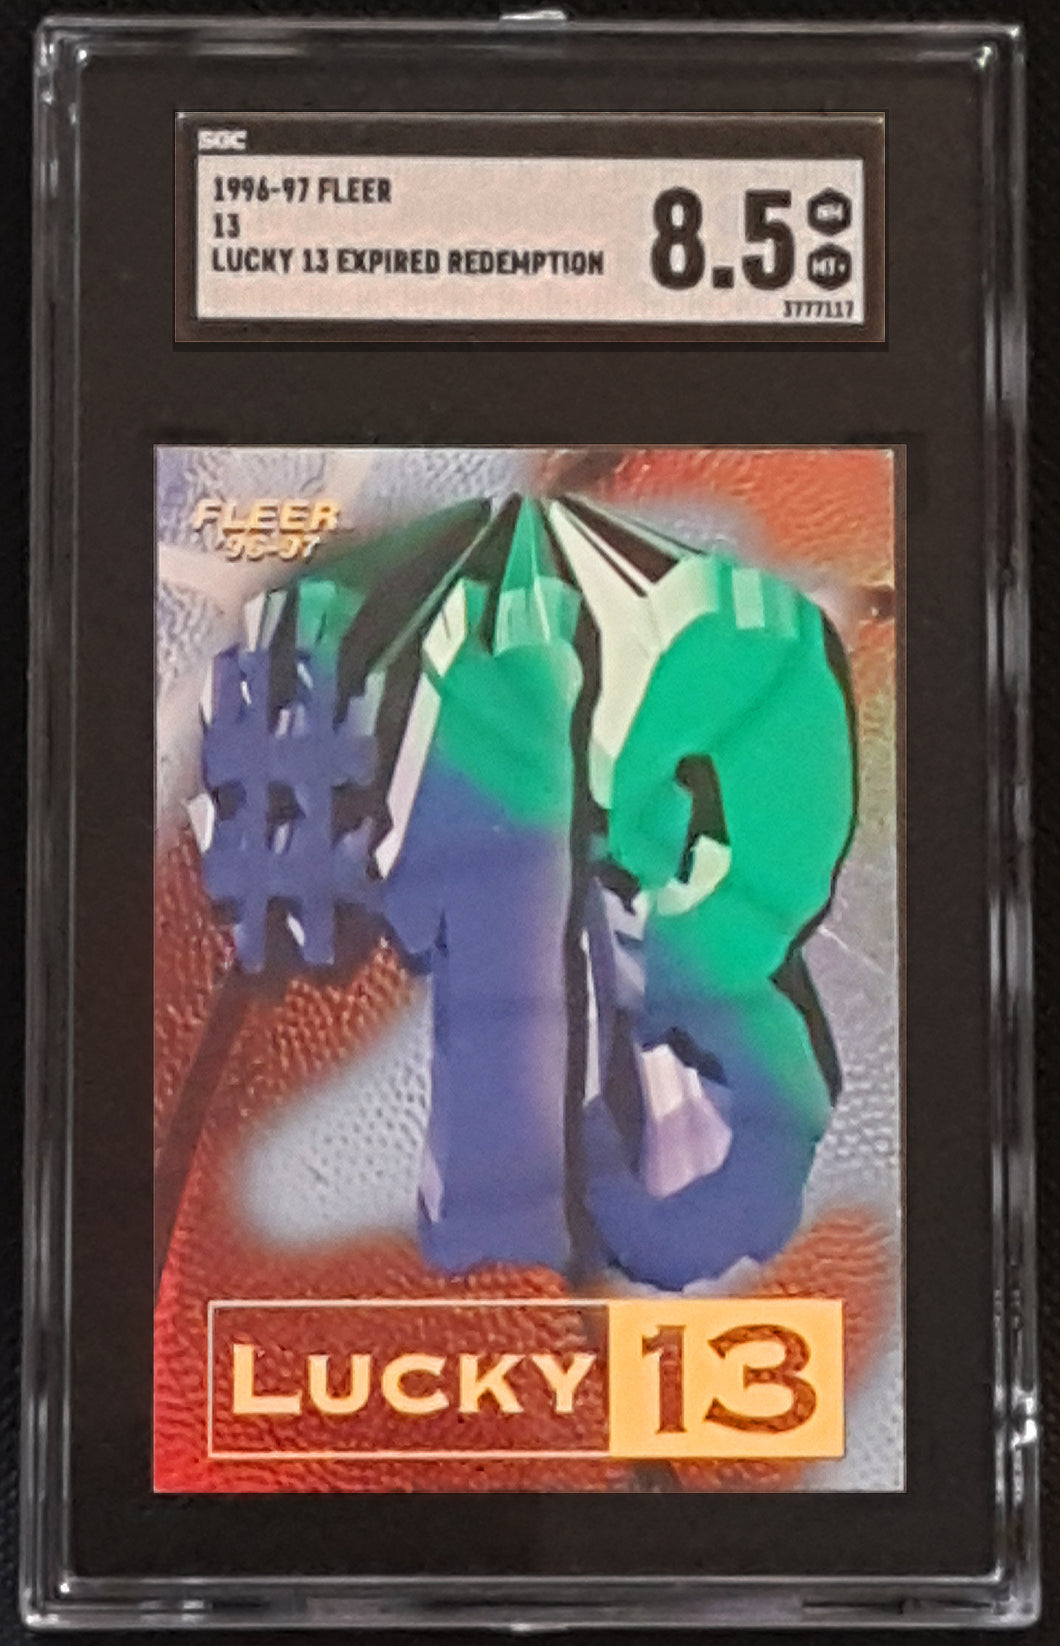 1996 Fleer LUCKY 13 Kobe Bryant RC Rookie Redemption Card Graded SGC 8.5 (Super Rare, Super Low Pop!)